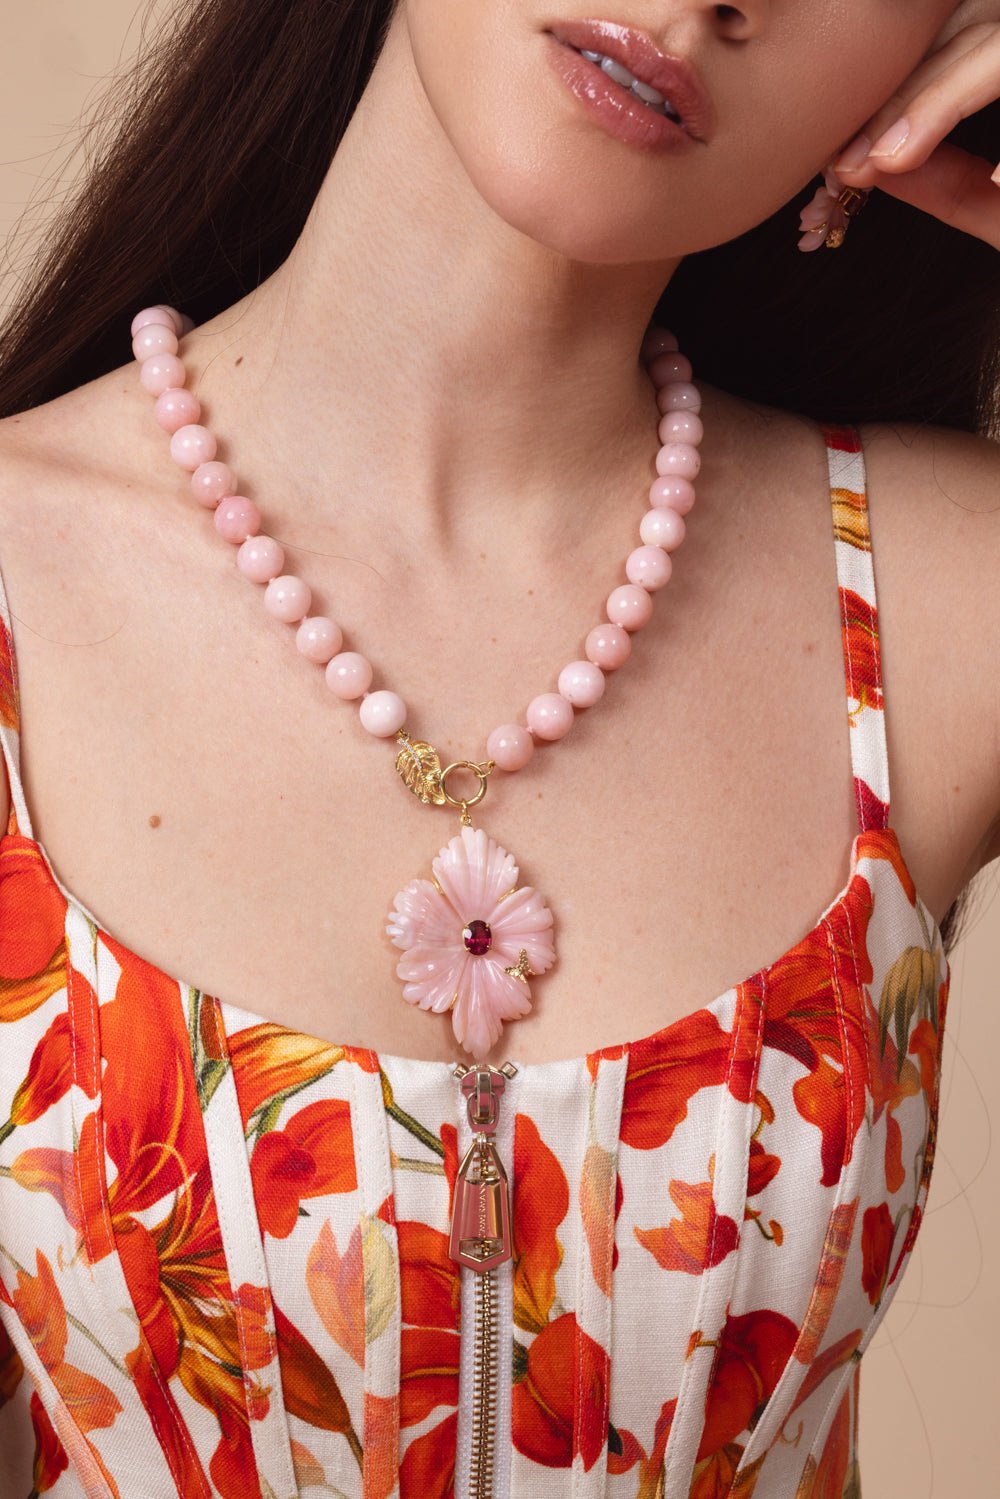 TANYA FARAH-Opal Beaded Flower Pendant Necklace-YELLOW GOLD